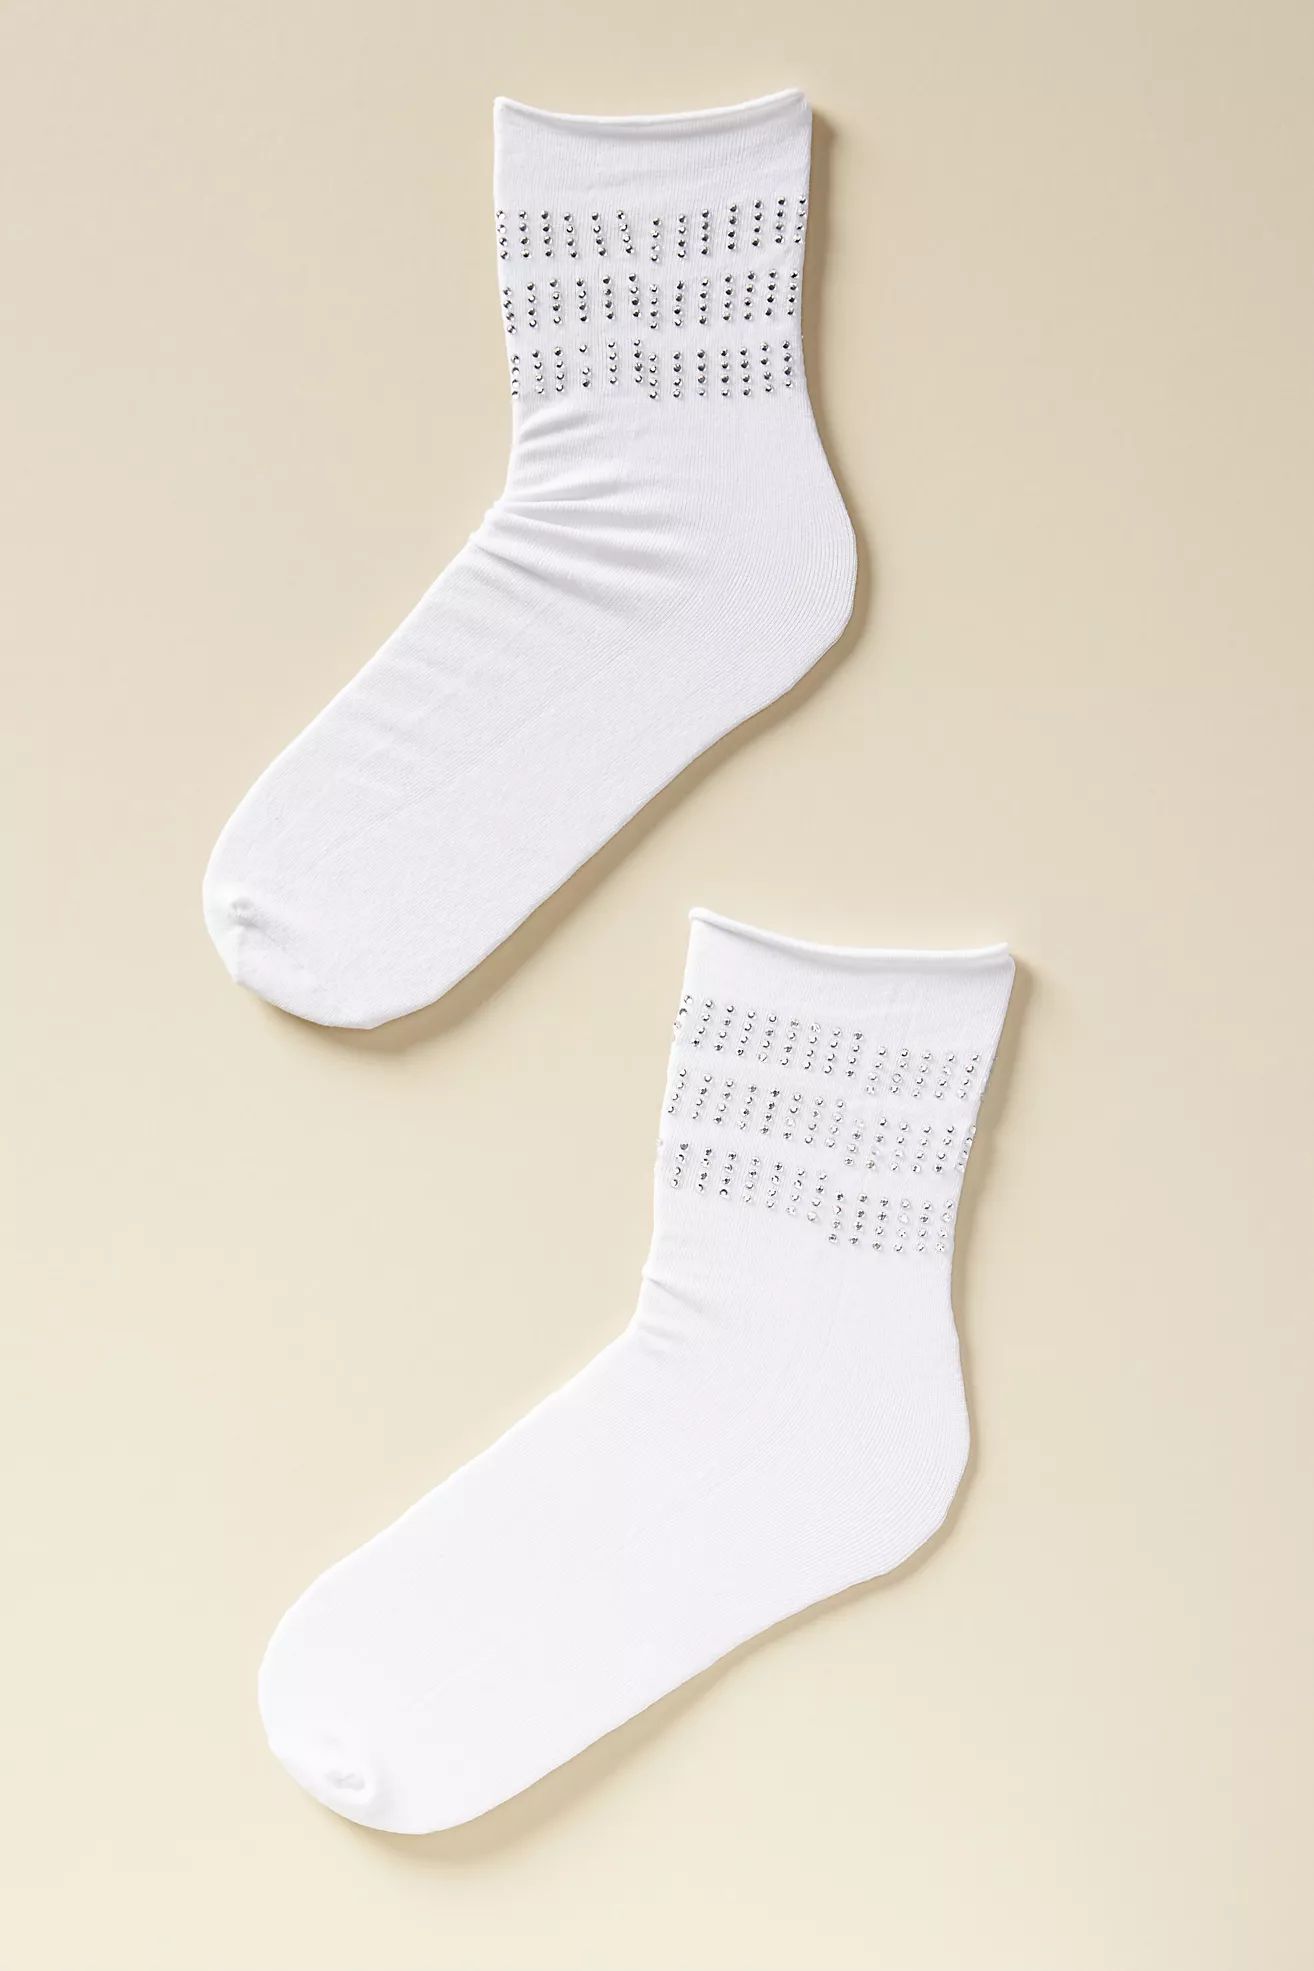 Cynthia Rowley Tall Sparkle Socks | Anthropologie (US)